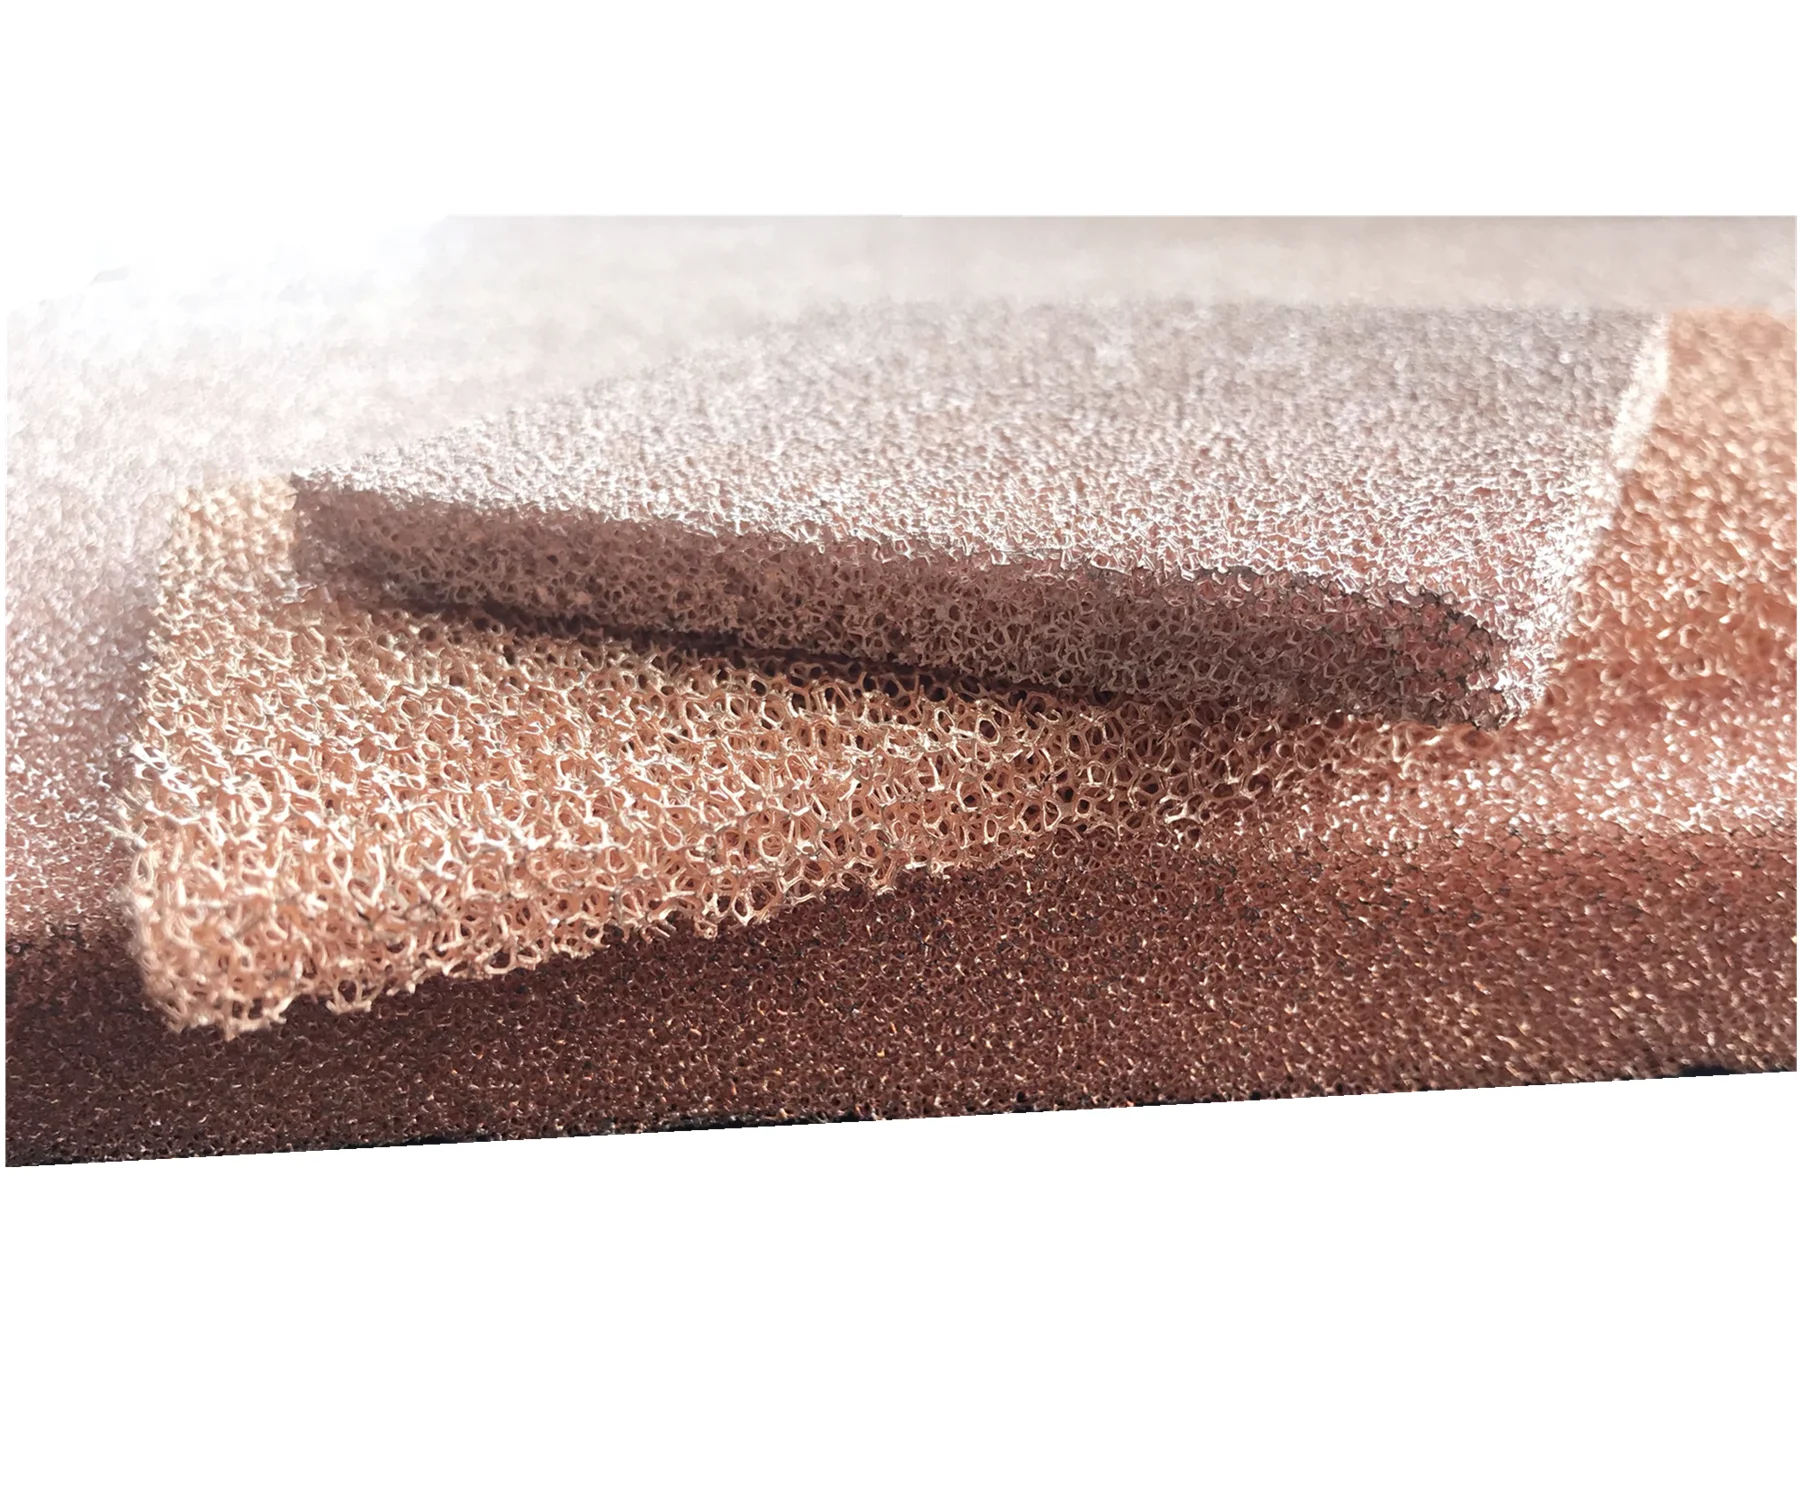 SAIDKOCC Brand High Purity Customized Ppi and Size Cu Copper Metal Foam for Li Battery Materials